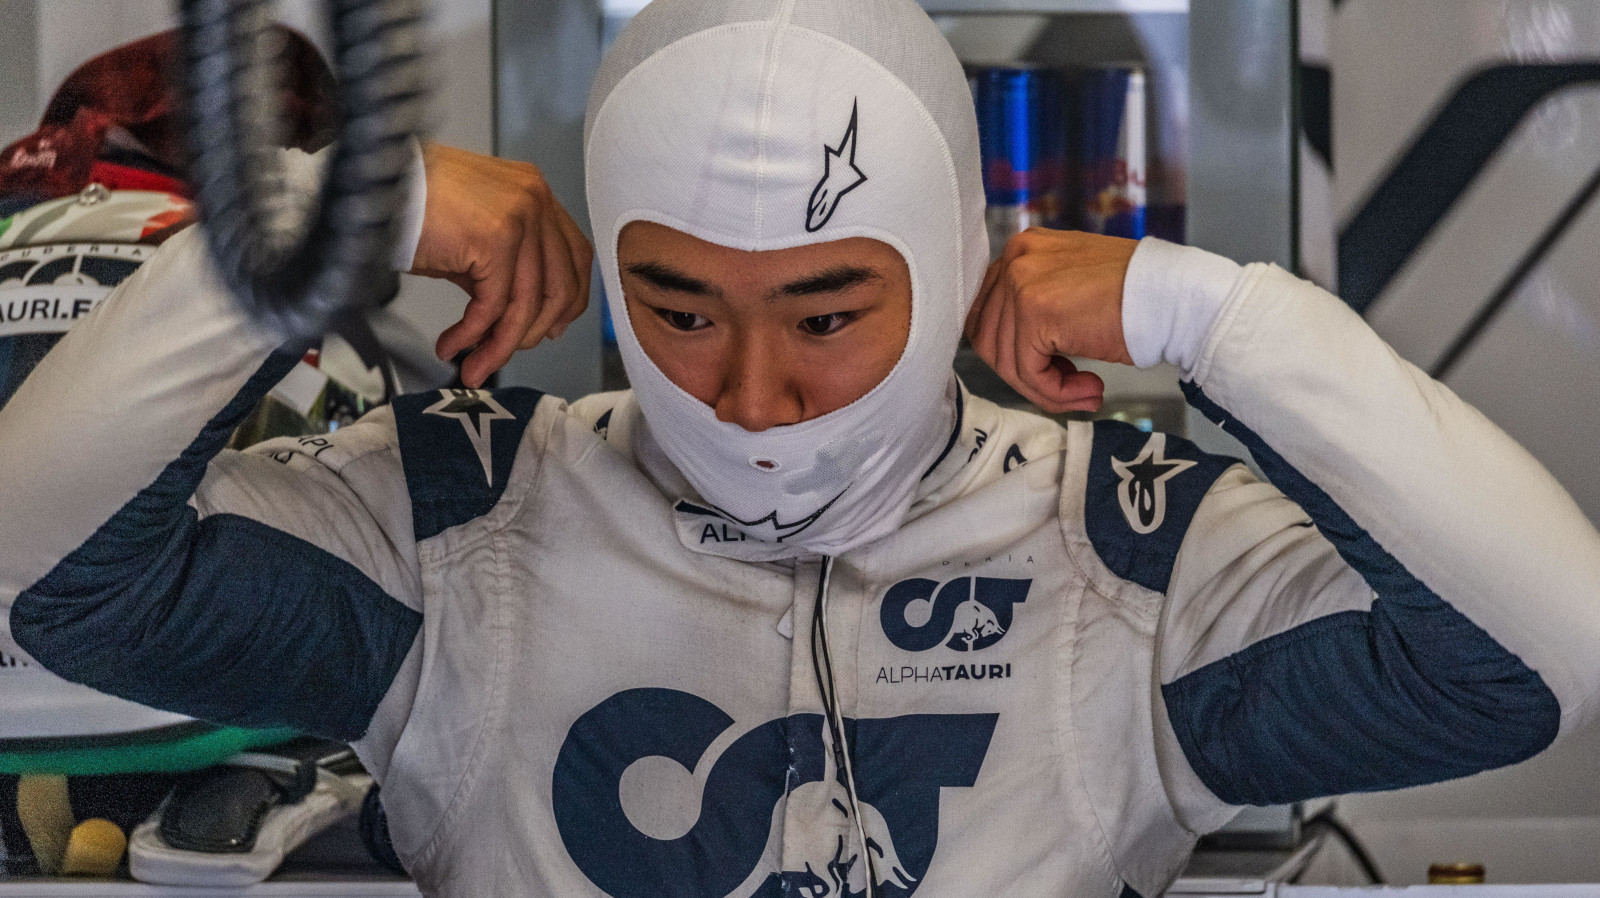 Yuki Tsunoda adjusting his race suit. Italy September 2022